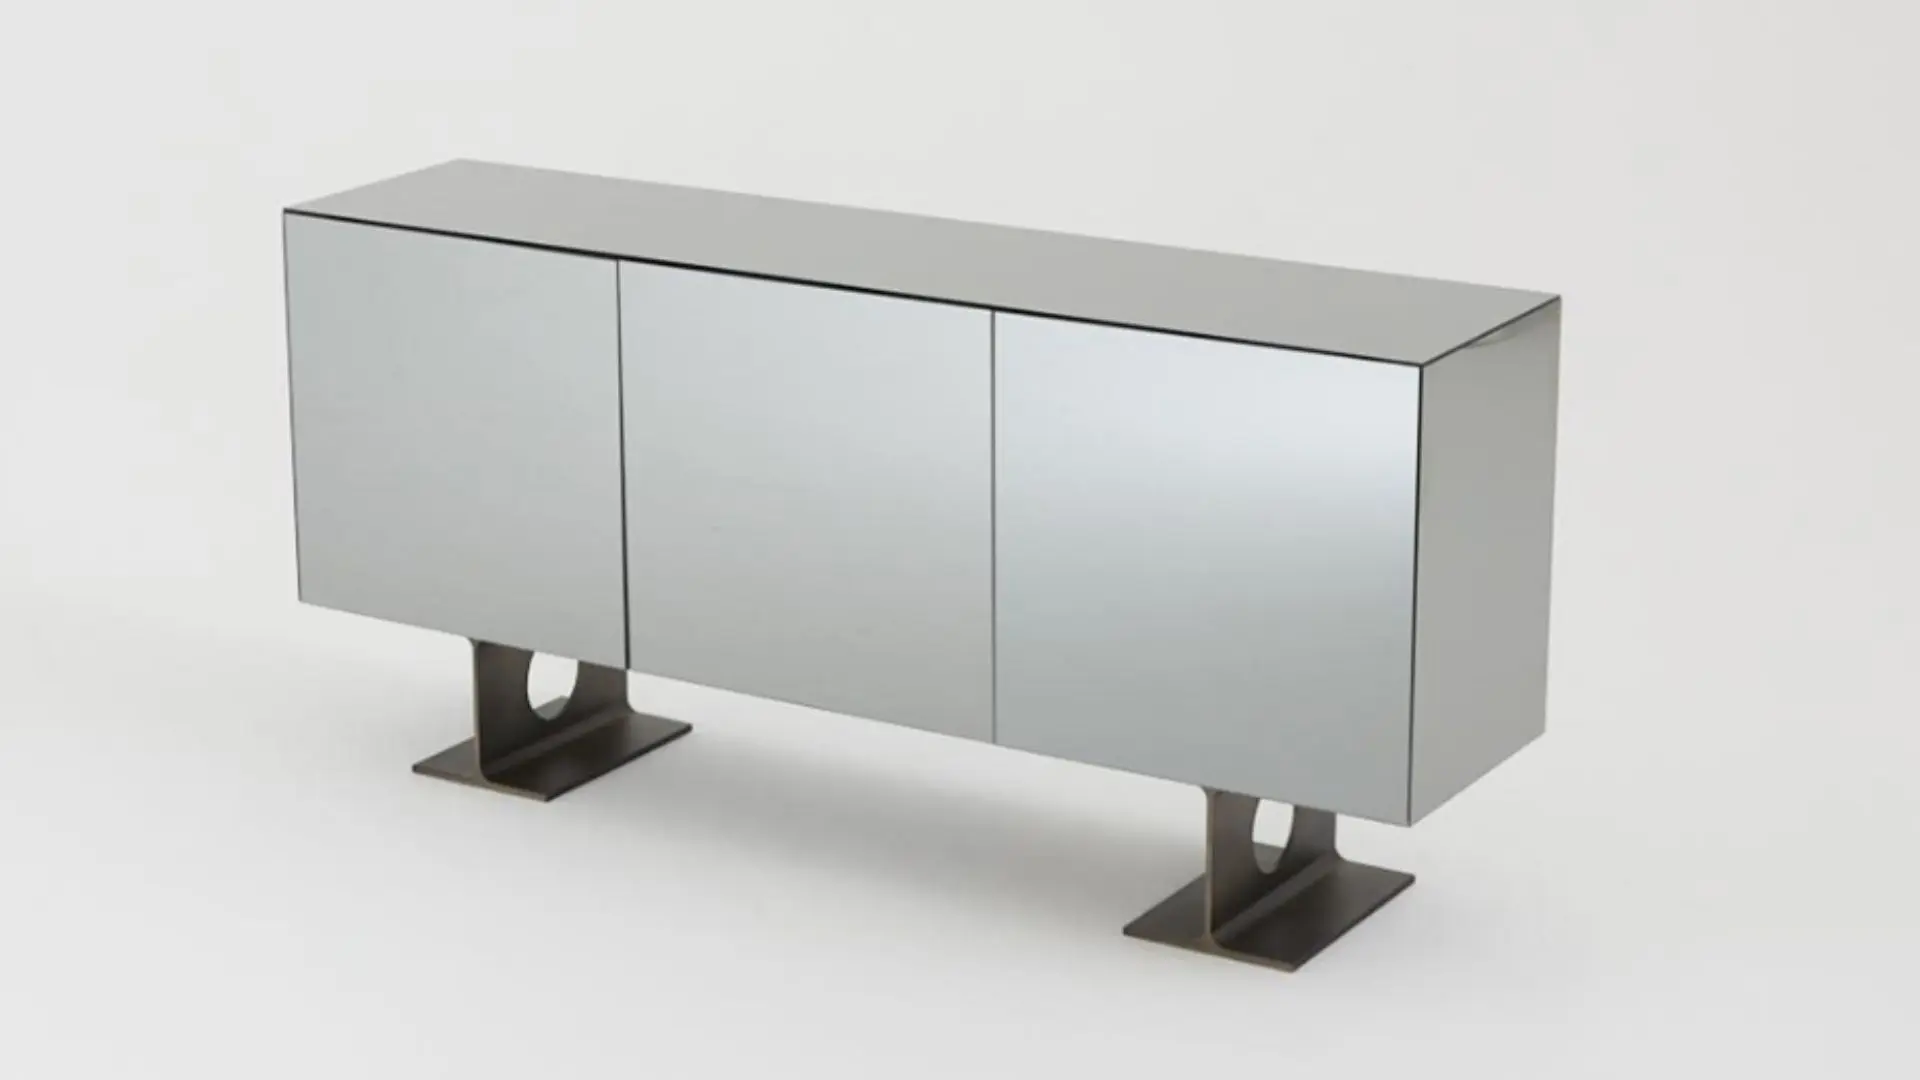 Milan sideboard _ 5 designs using H steel bars as the main focus - Cover